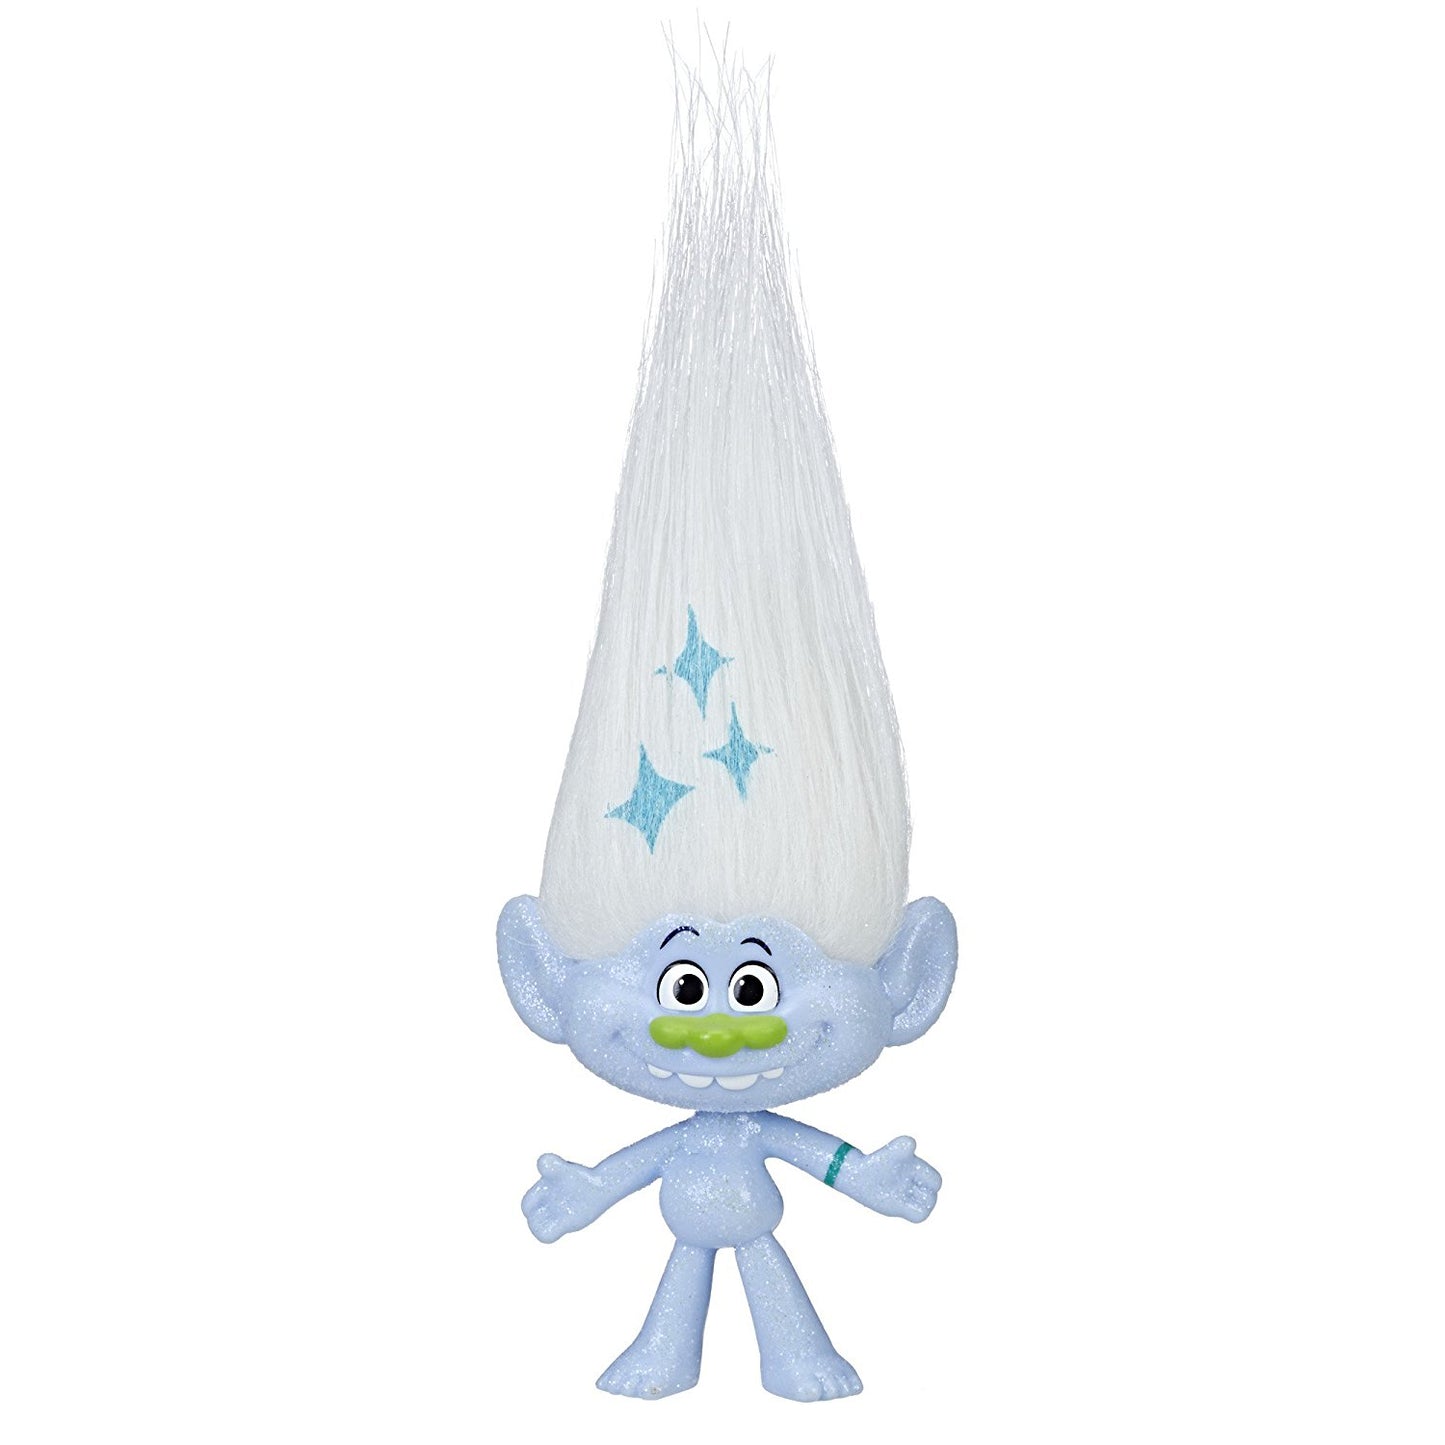 Trolls Guy Diamond Hair Collectible Figure with Printed Hair